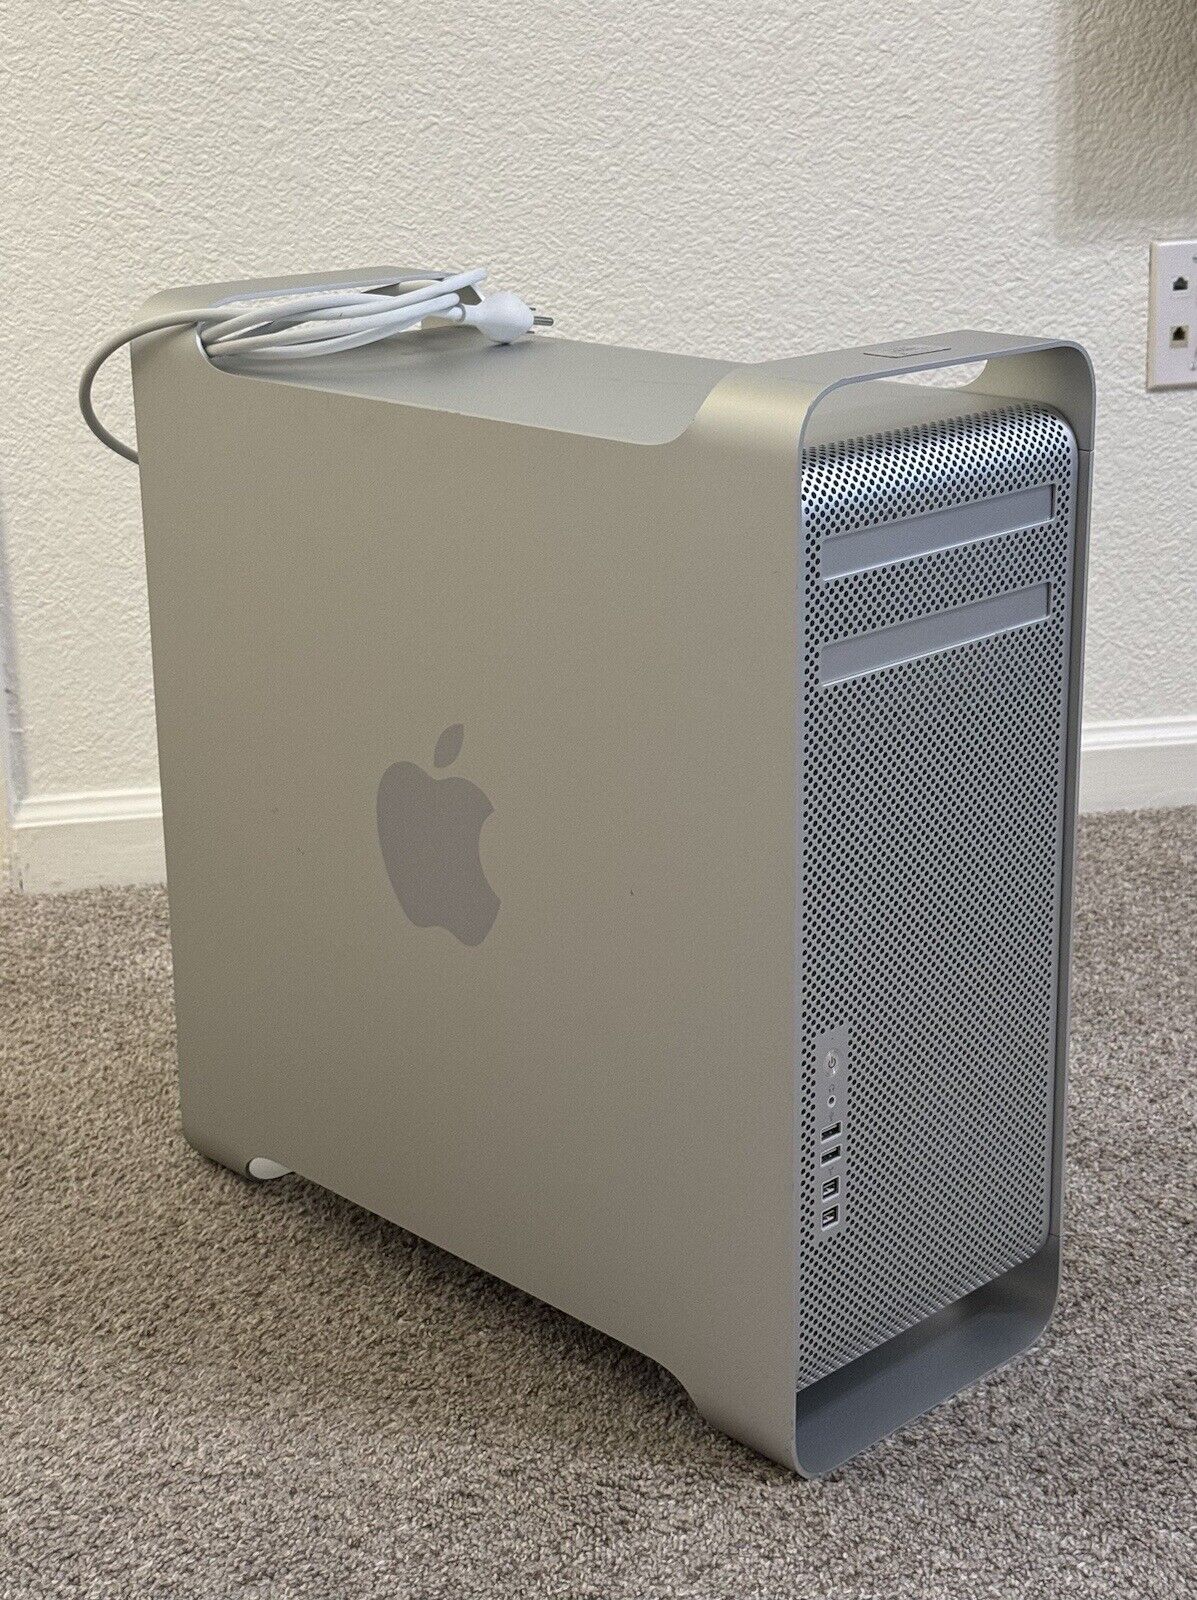 Apple Mac Pro A1289 Desktop (2012) 2.4GHz 2x6-Core Xeon E5645, RAM 64Gb, HDD 4TB